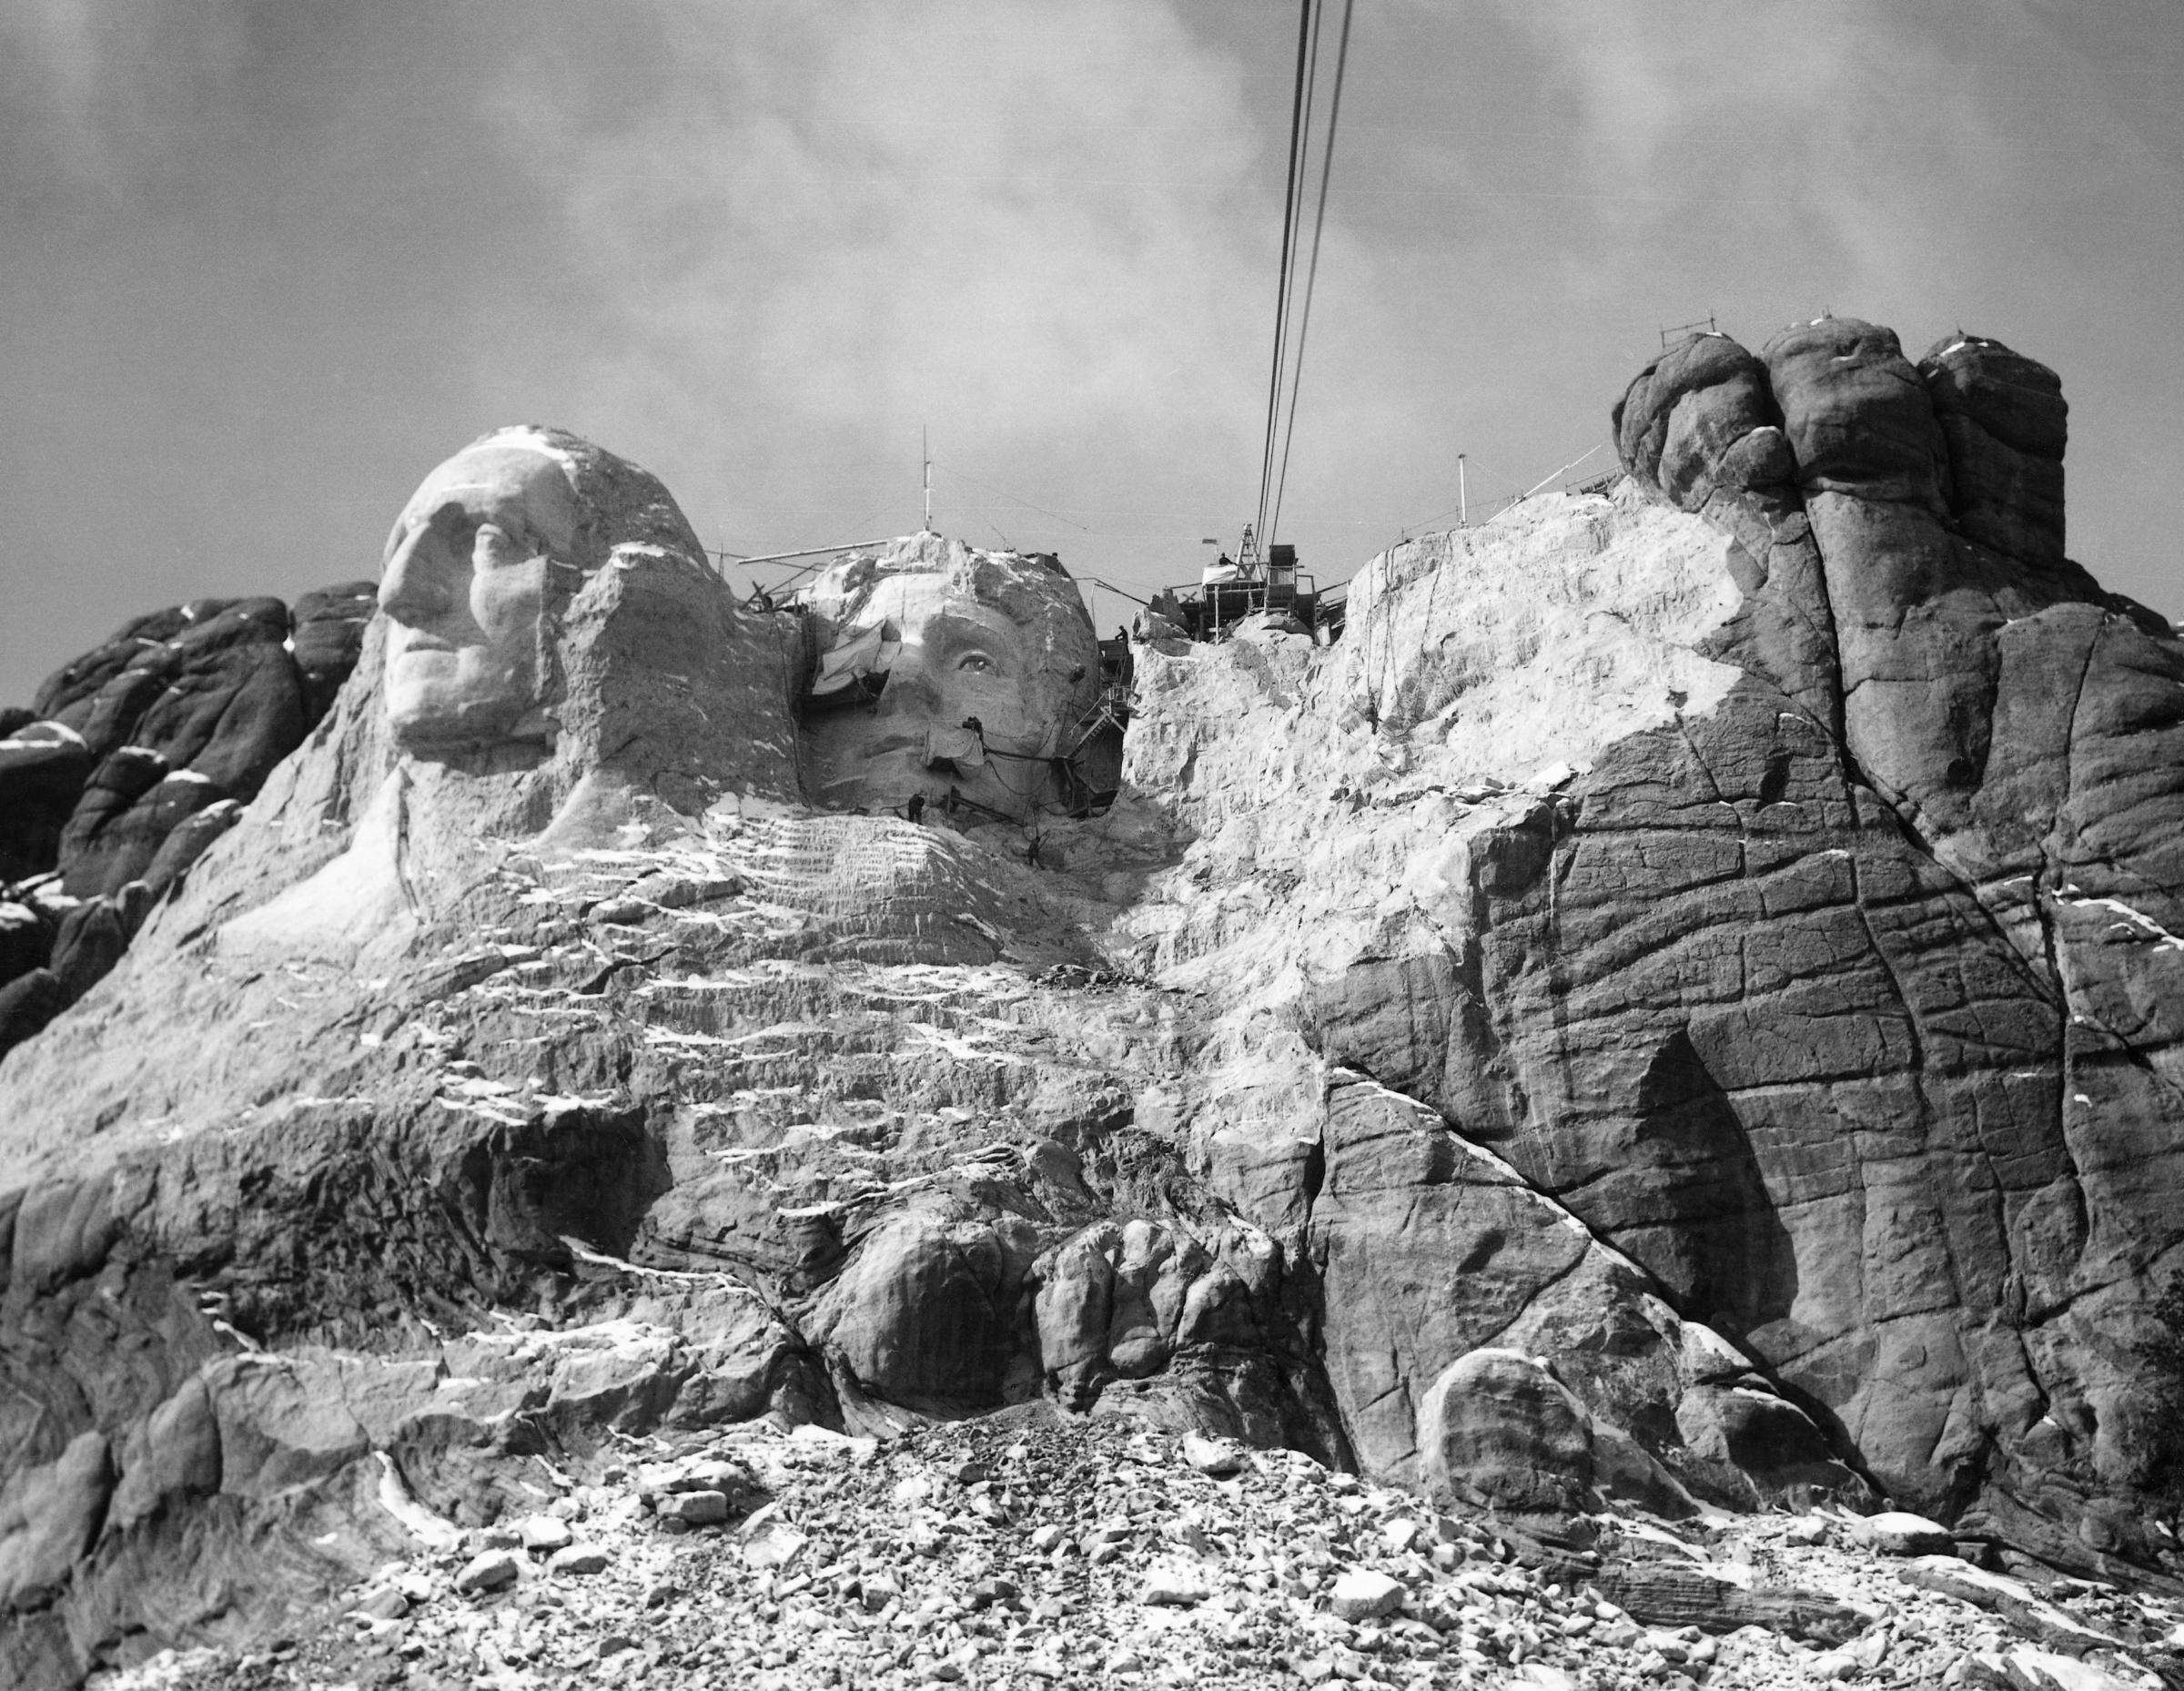 View of Mount Rushmore in Progress